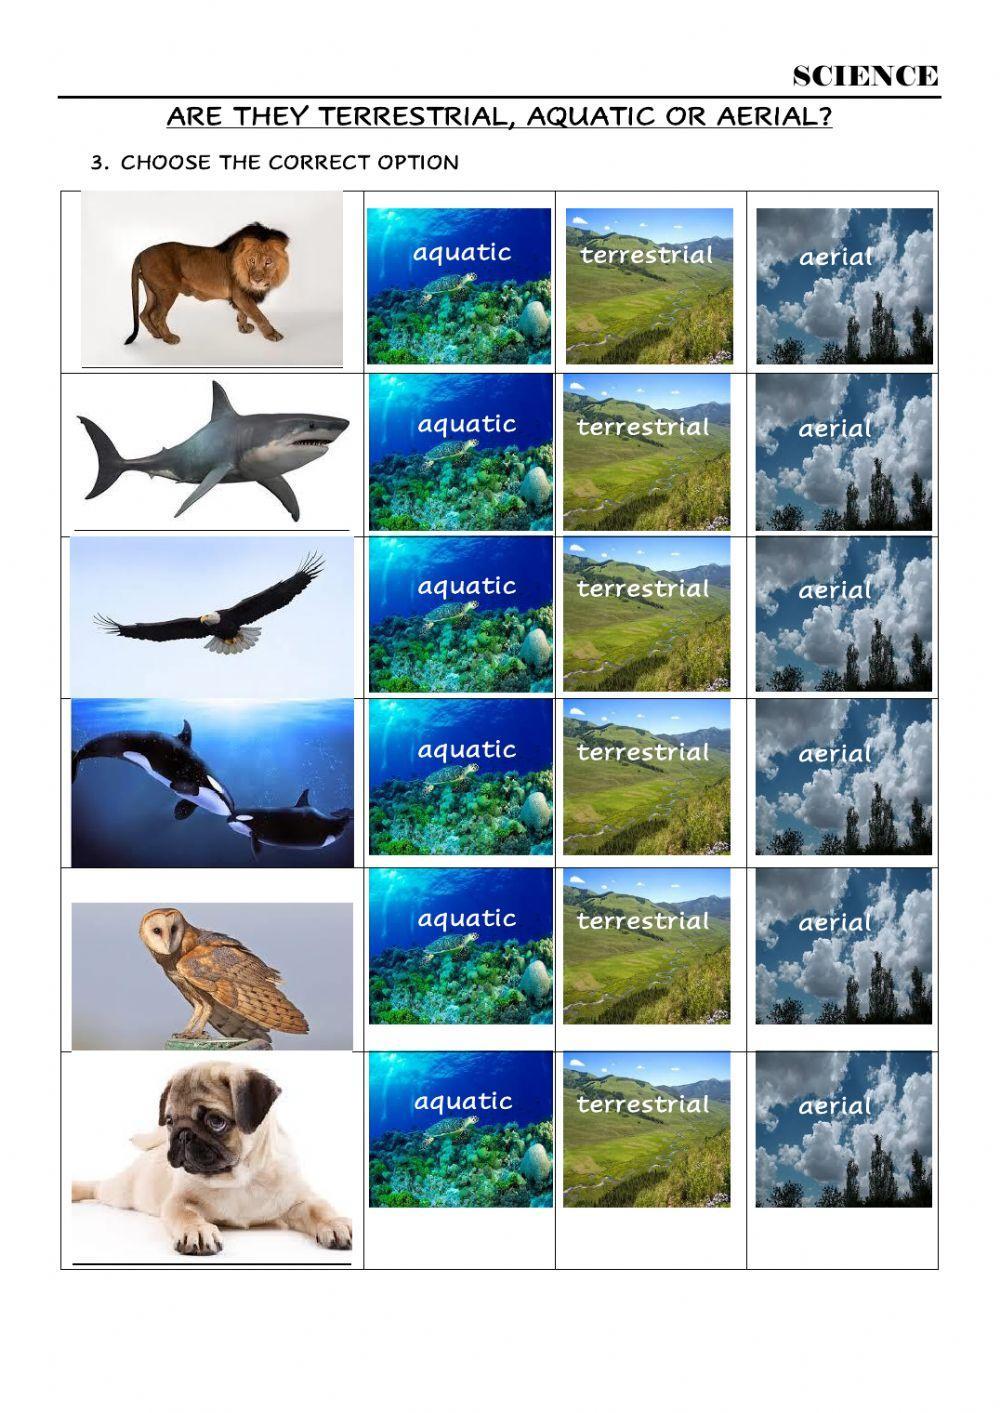 Animals movements and habitats